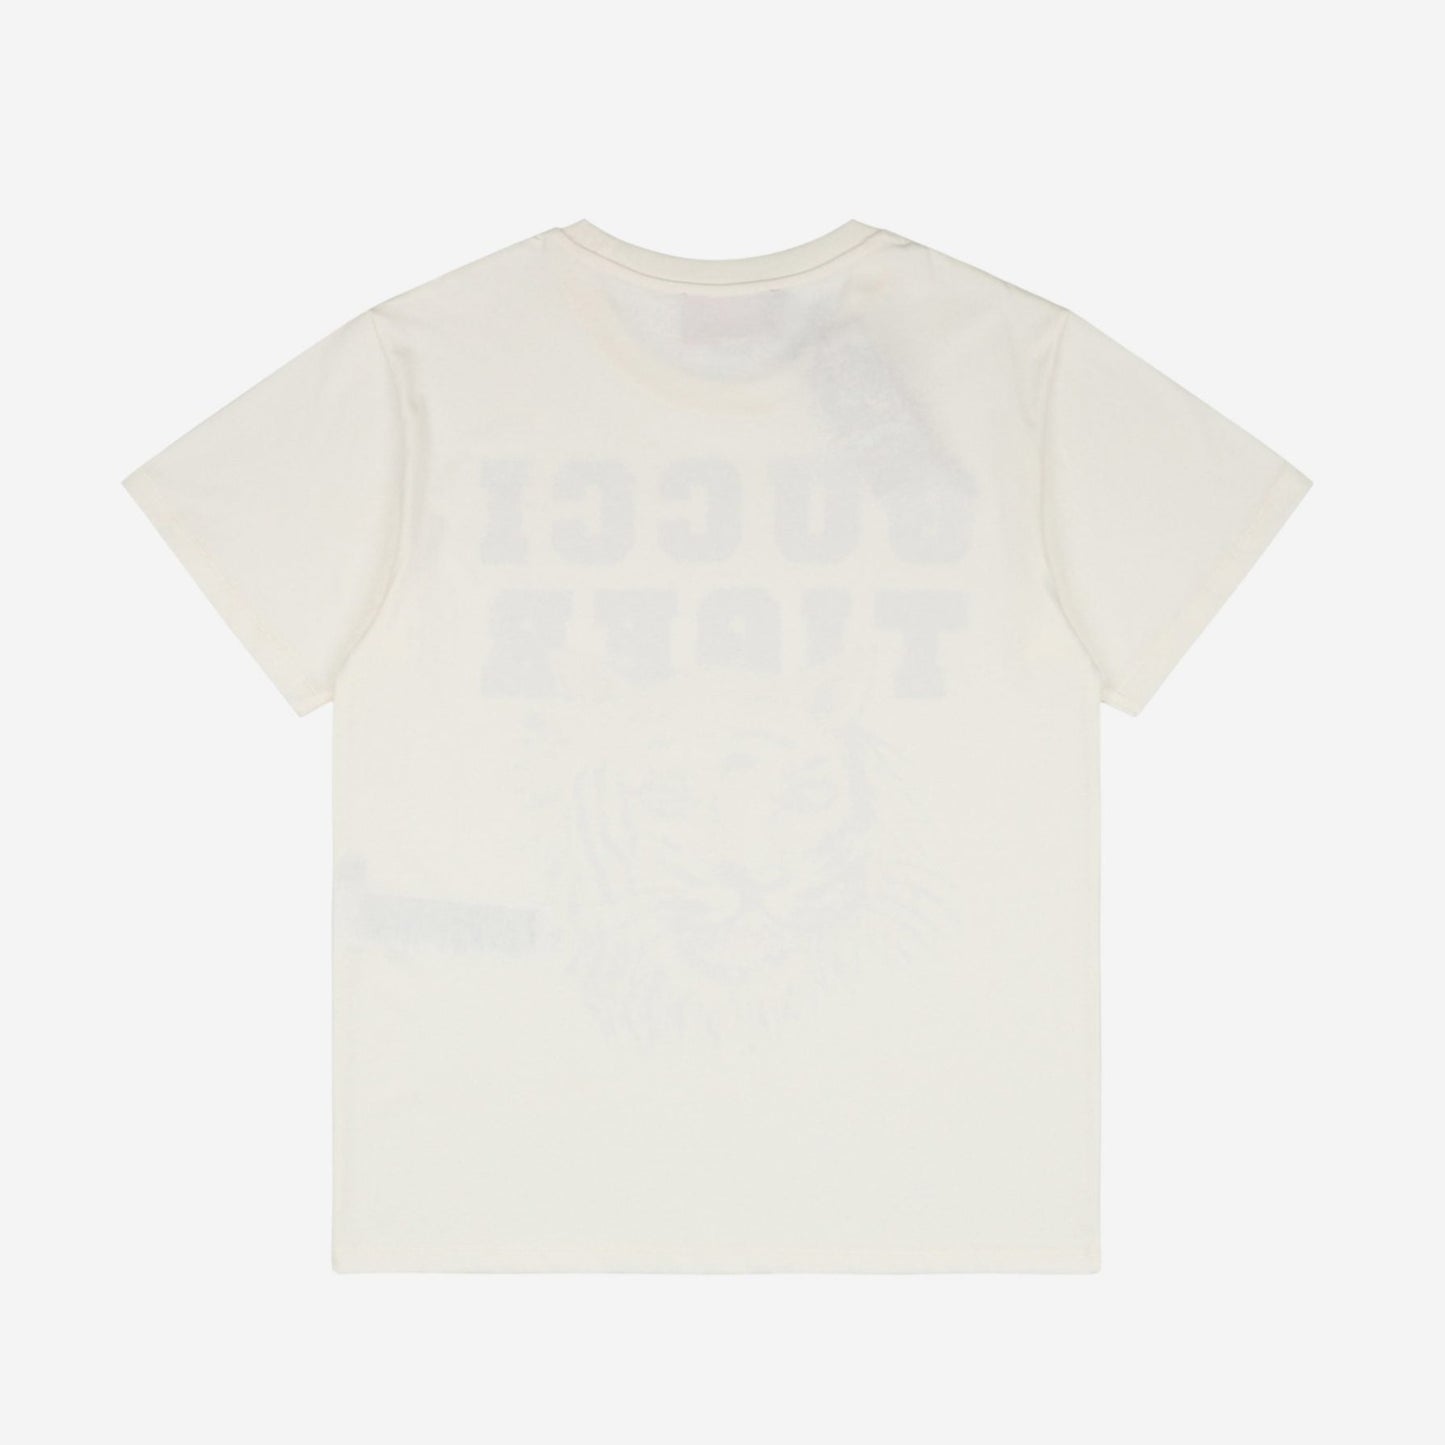 Gucc1 Tiger Print White T-Shirt